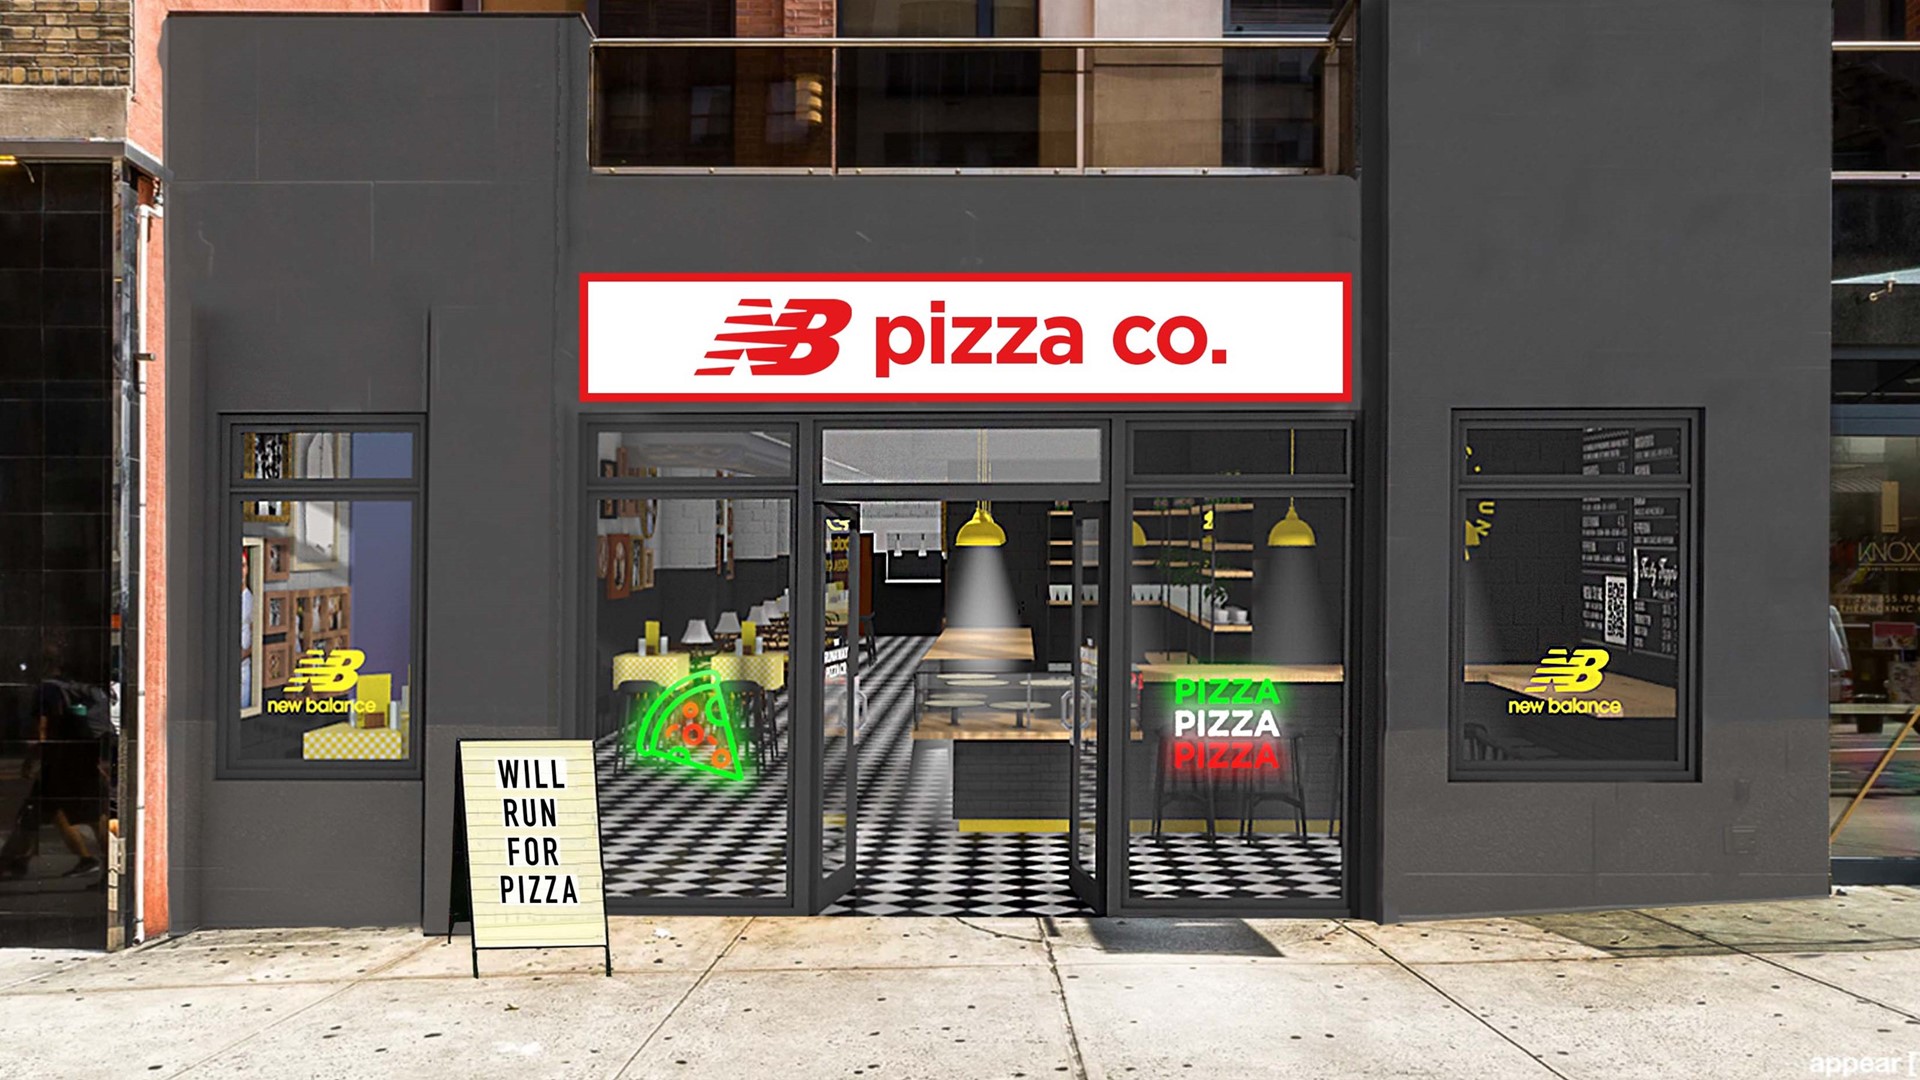 NB Pizza Co. Pop-Up Exterior Rendering